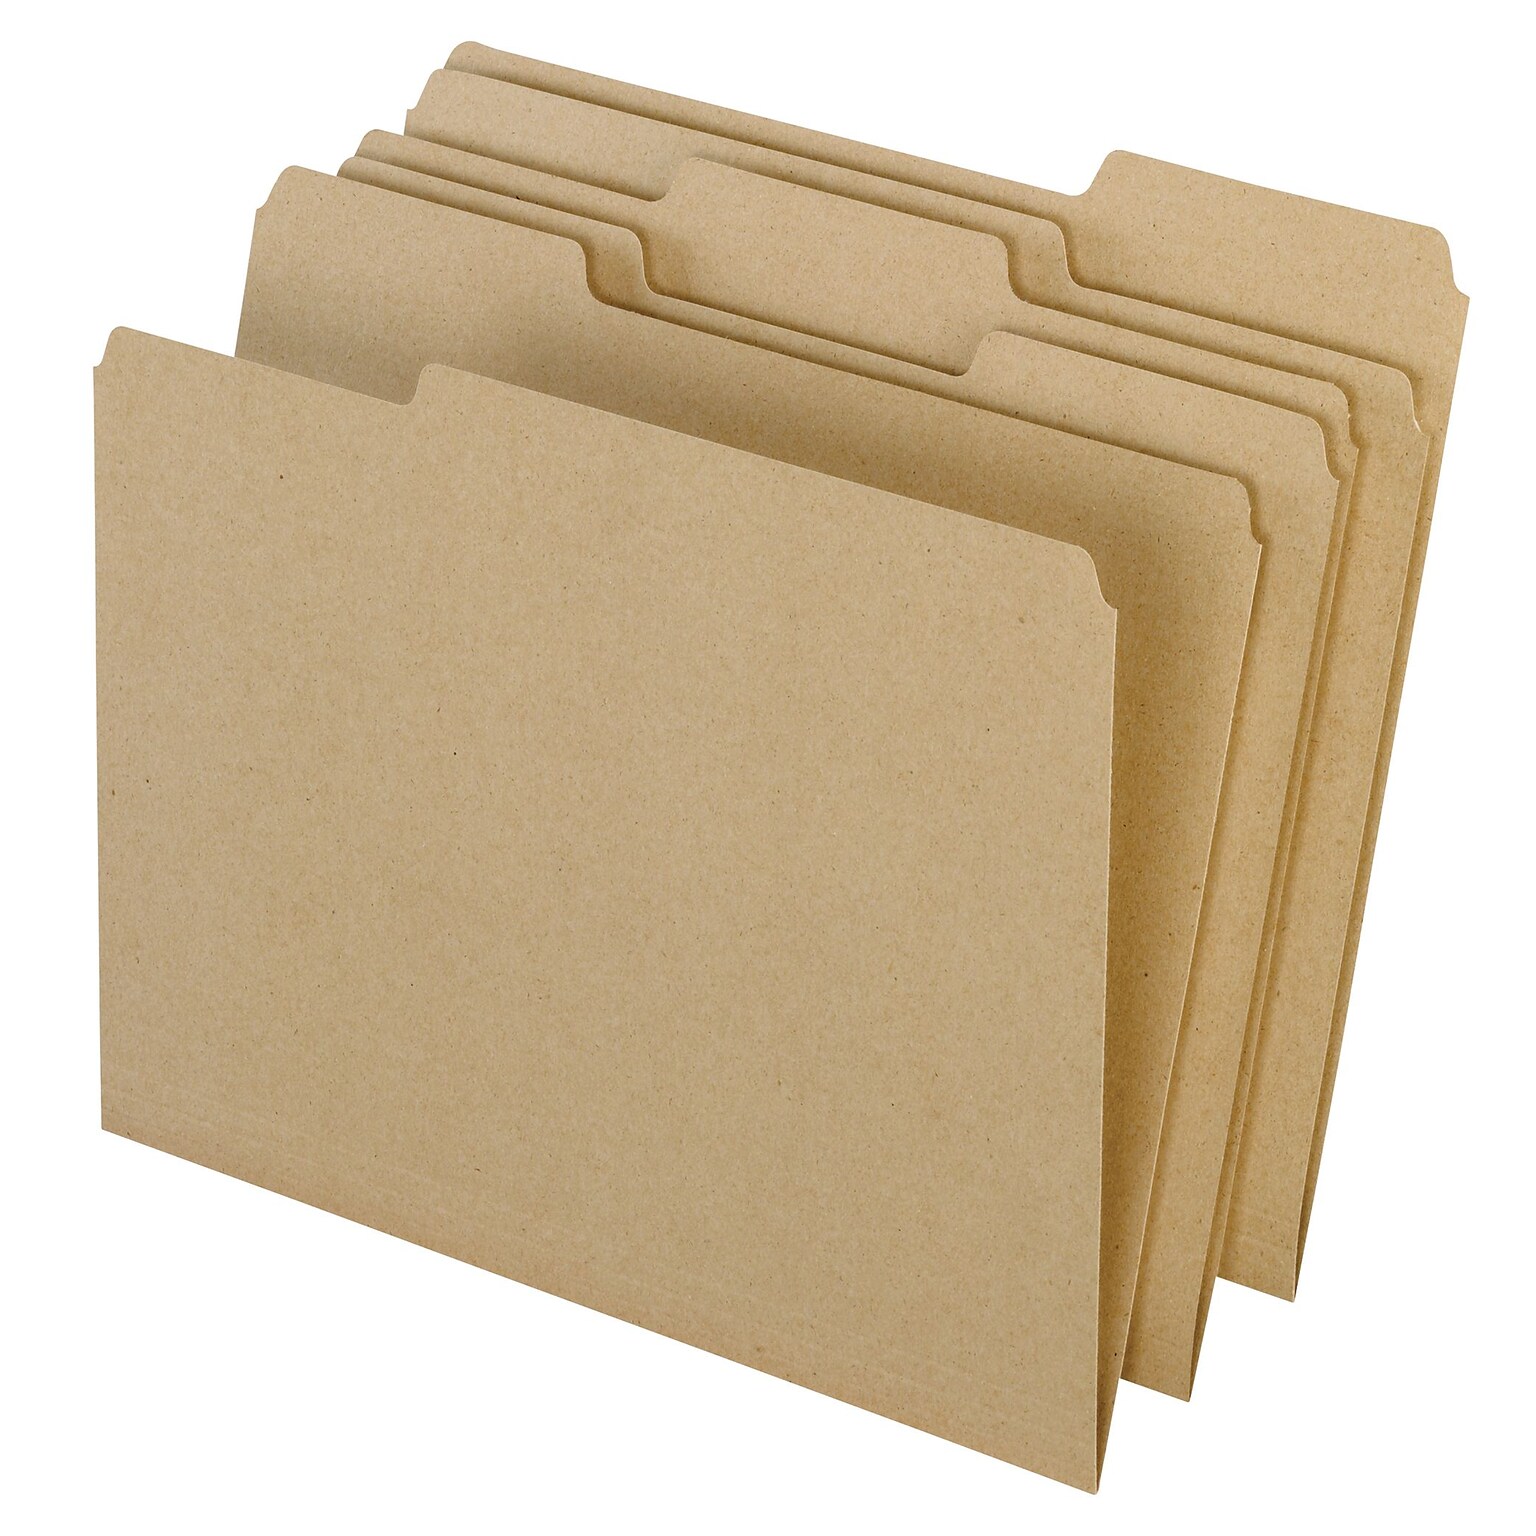 Pendaflex EarthWise File Folder, 3 Tab, Letter Size, Natural, 100/Box (PFX 04342)